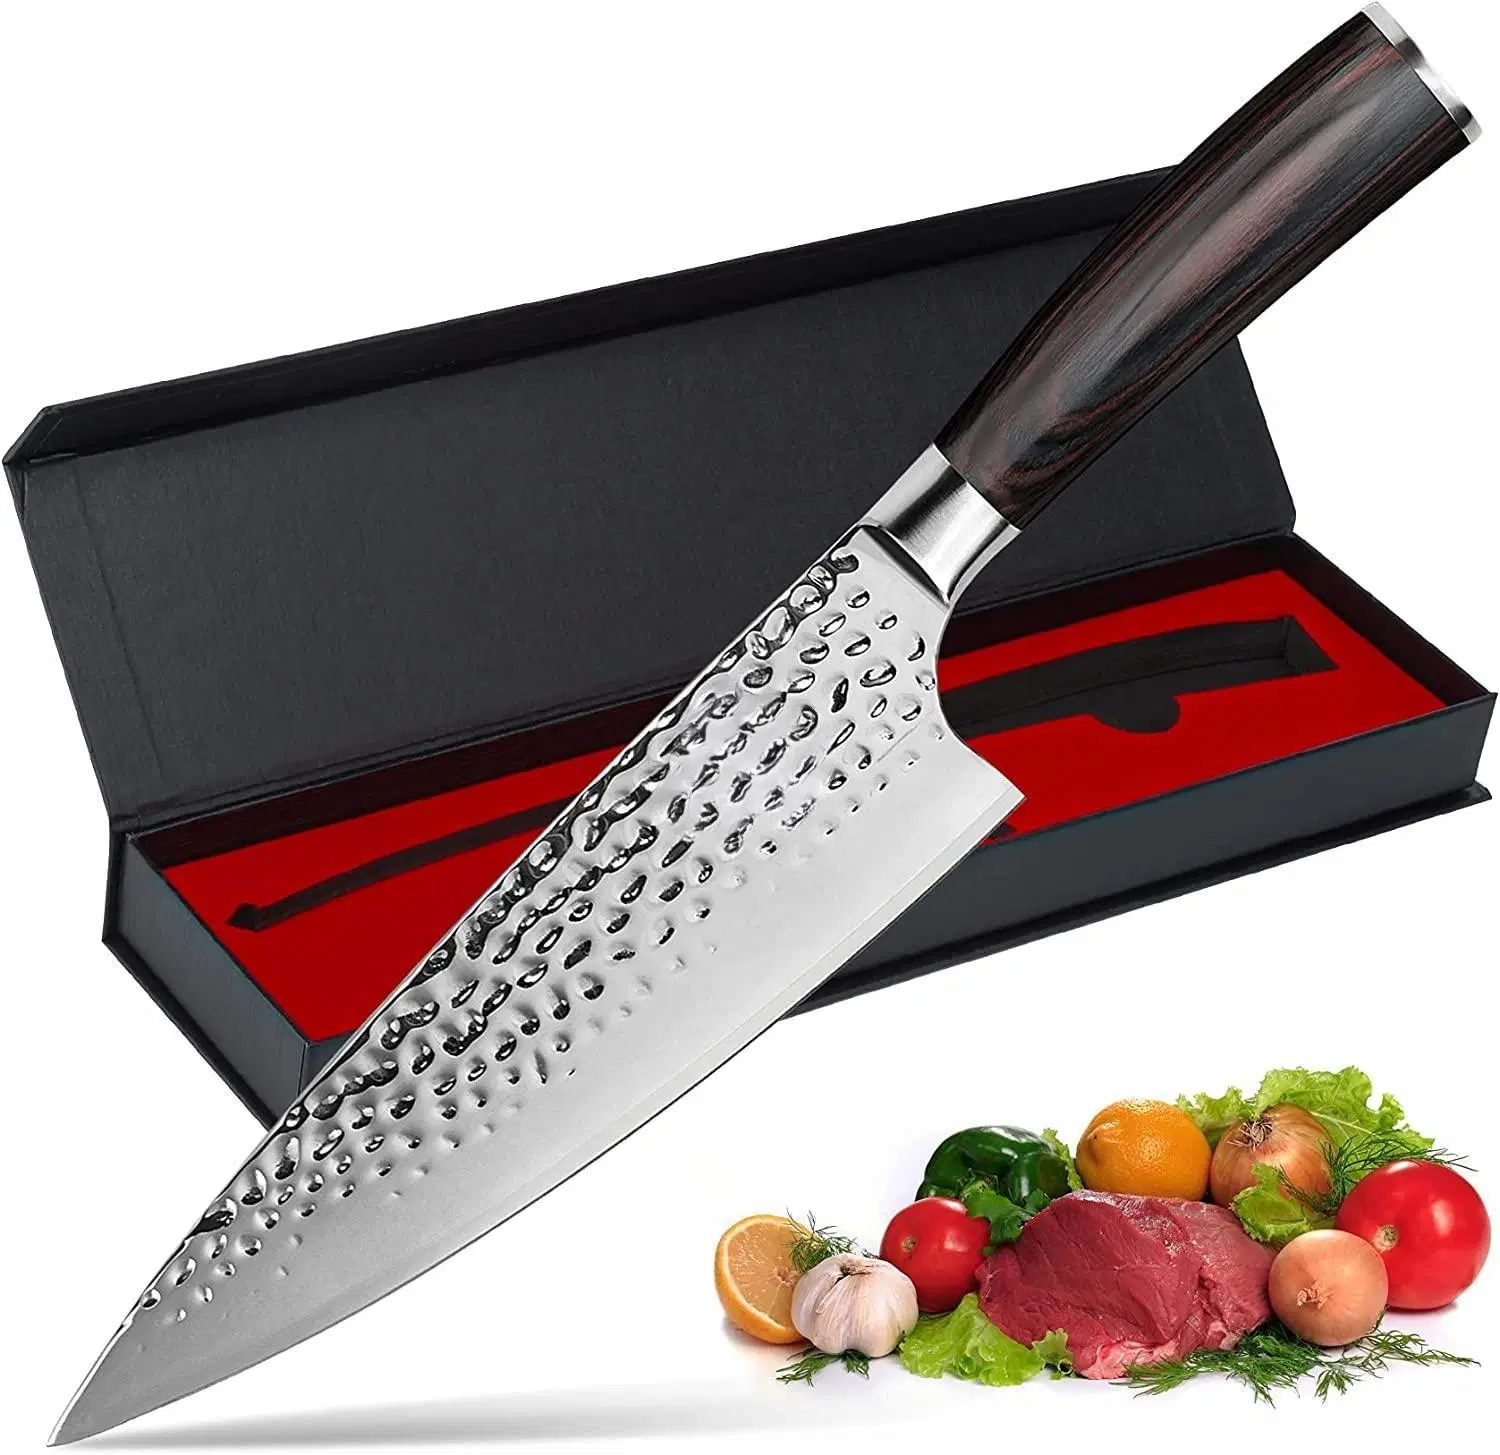 Acero inoxidable Premium Cocina japonesa Sharp 8 pulgadas de Damasco Chef cuchillo de cocina